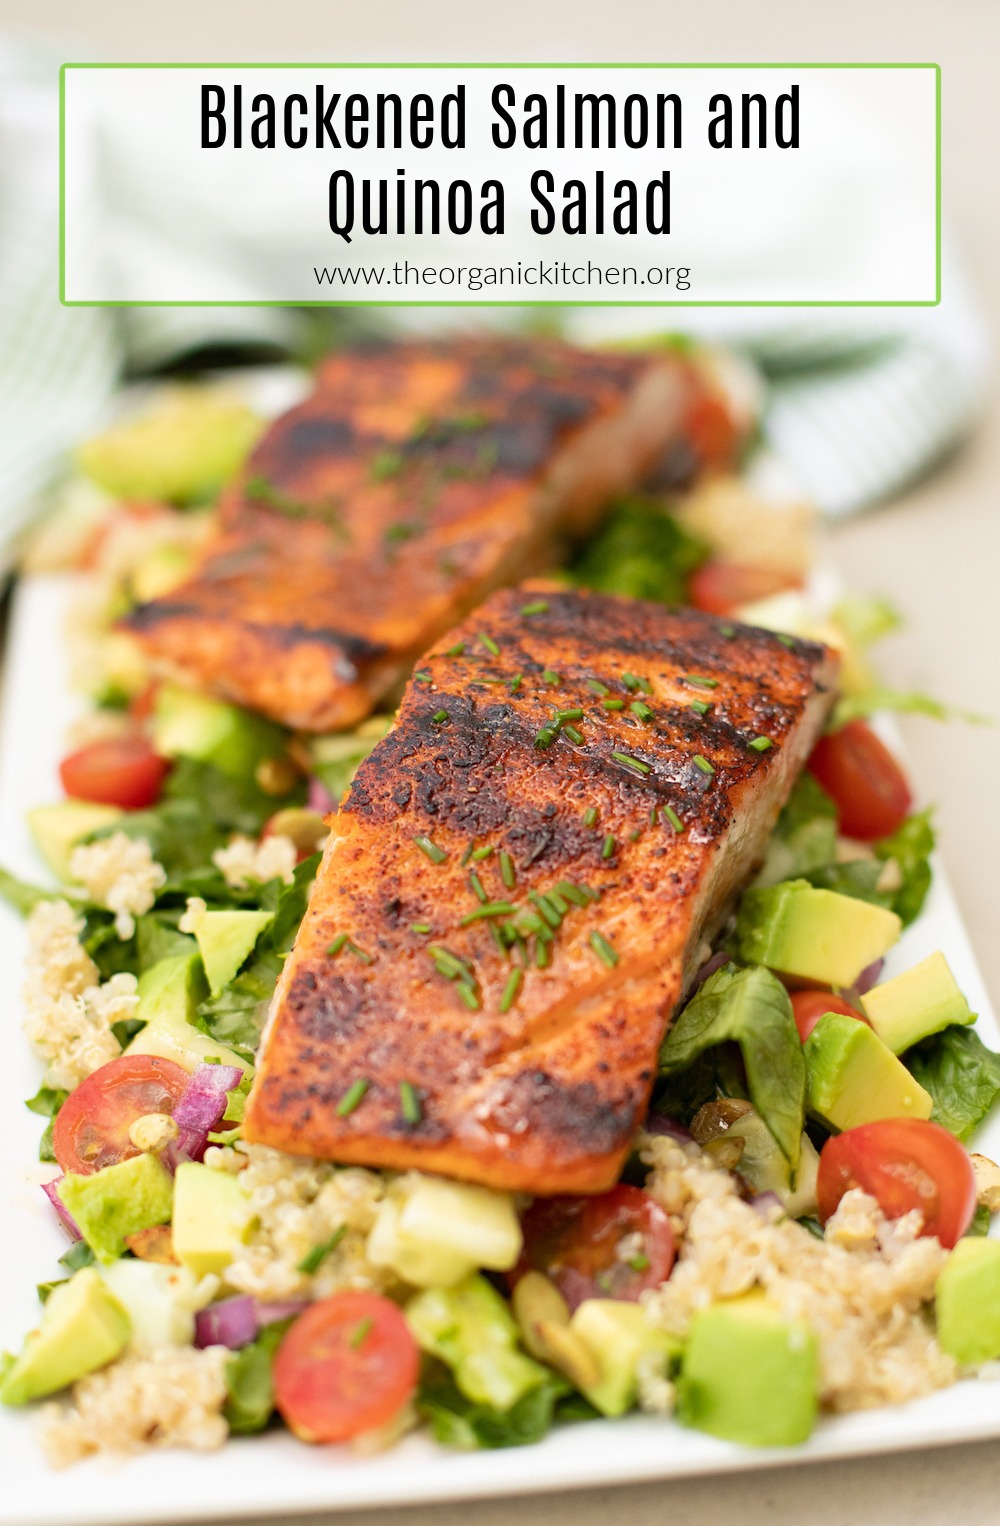 Blackened salmon and quinoa salad on white plate